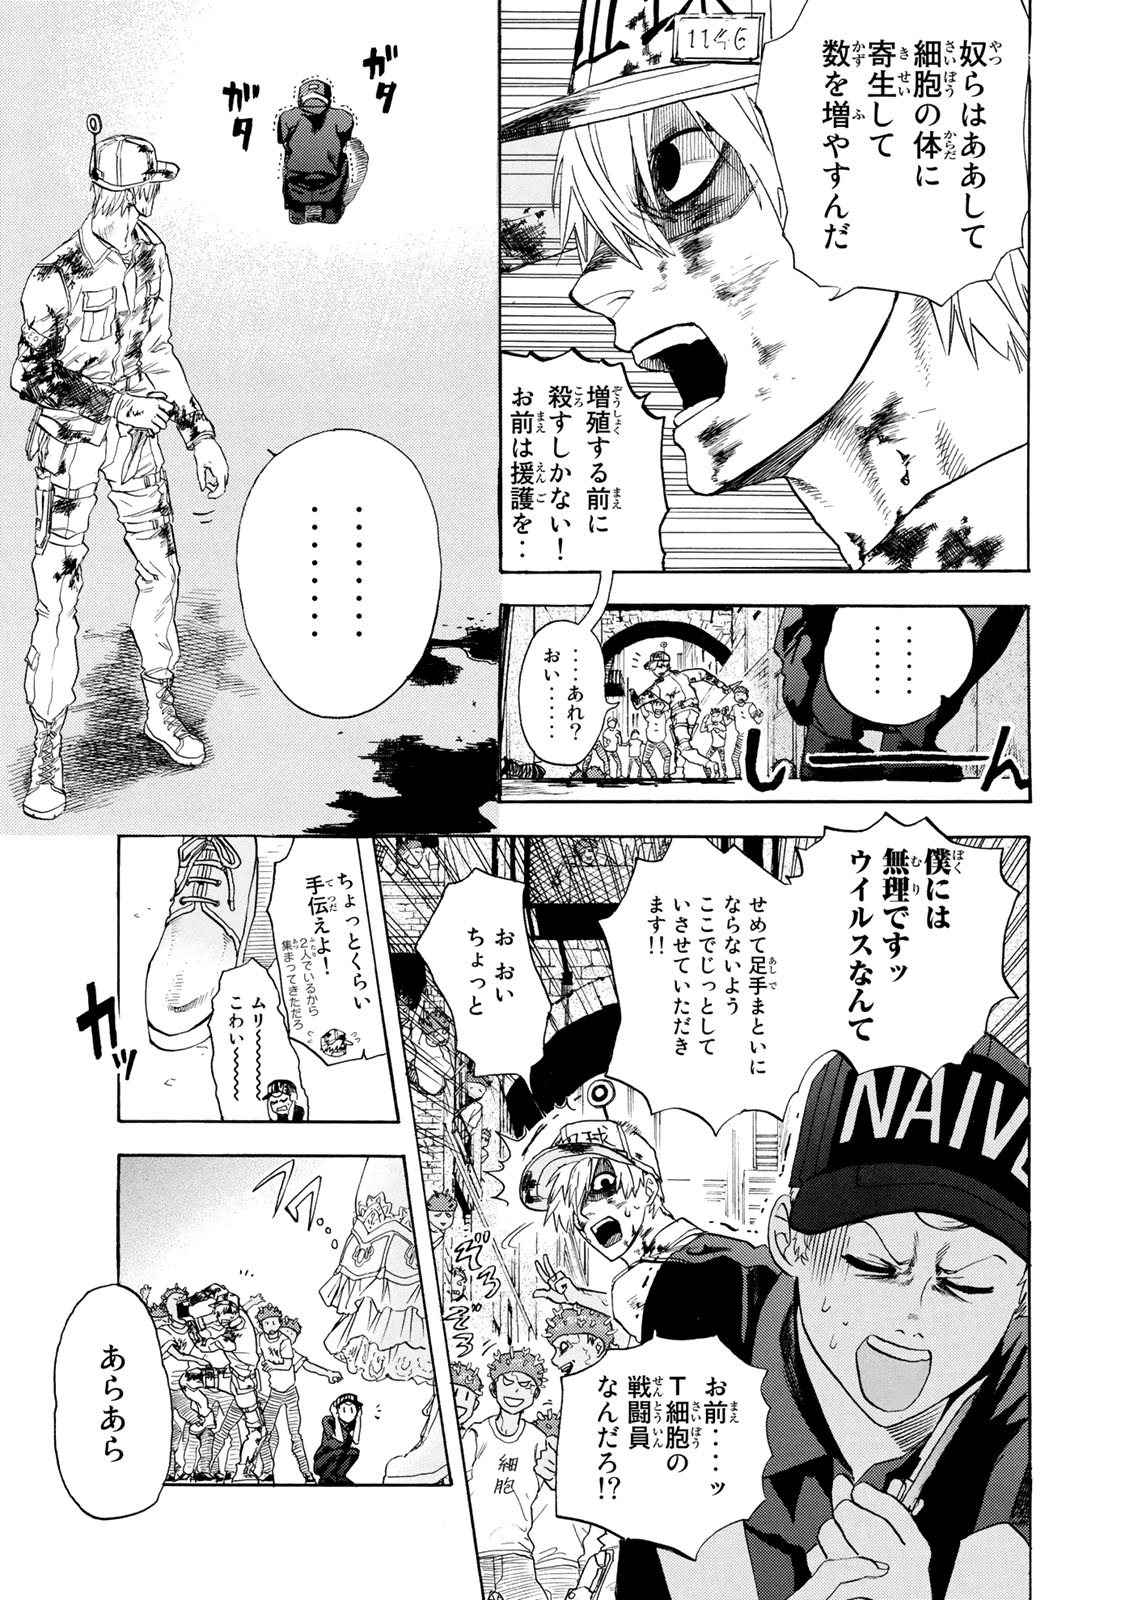 Hataraku Saibou - Chapter 3 - Page 9